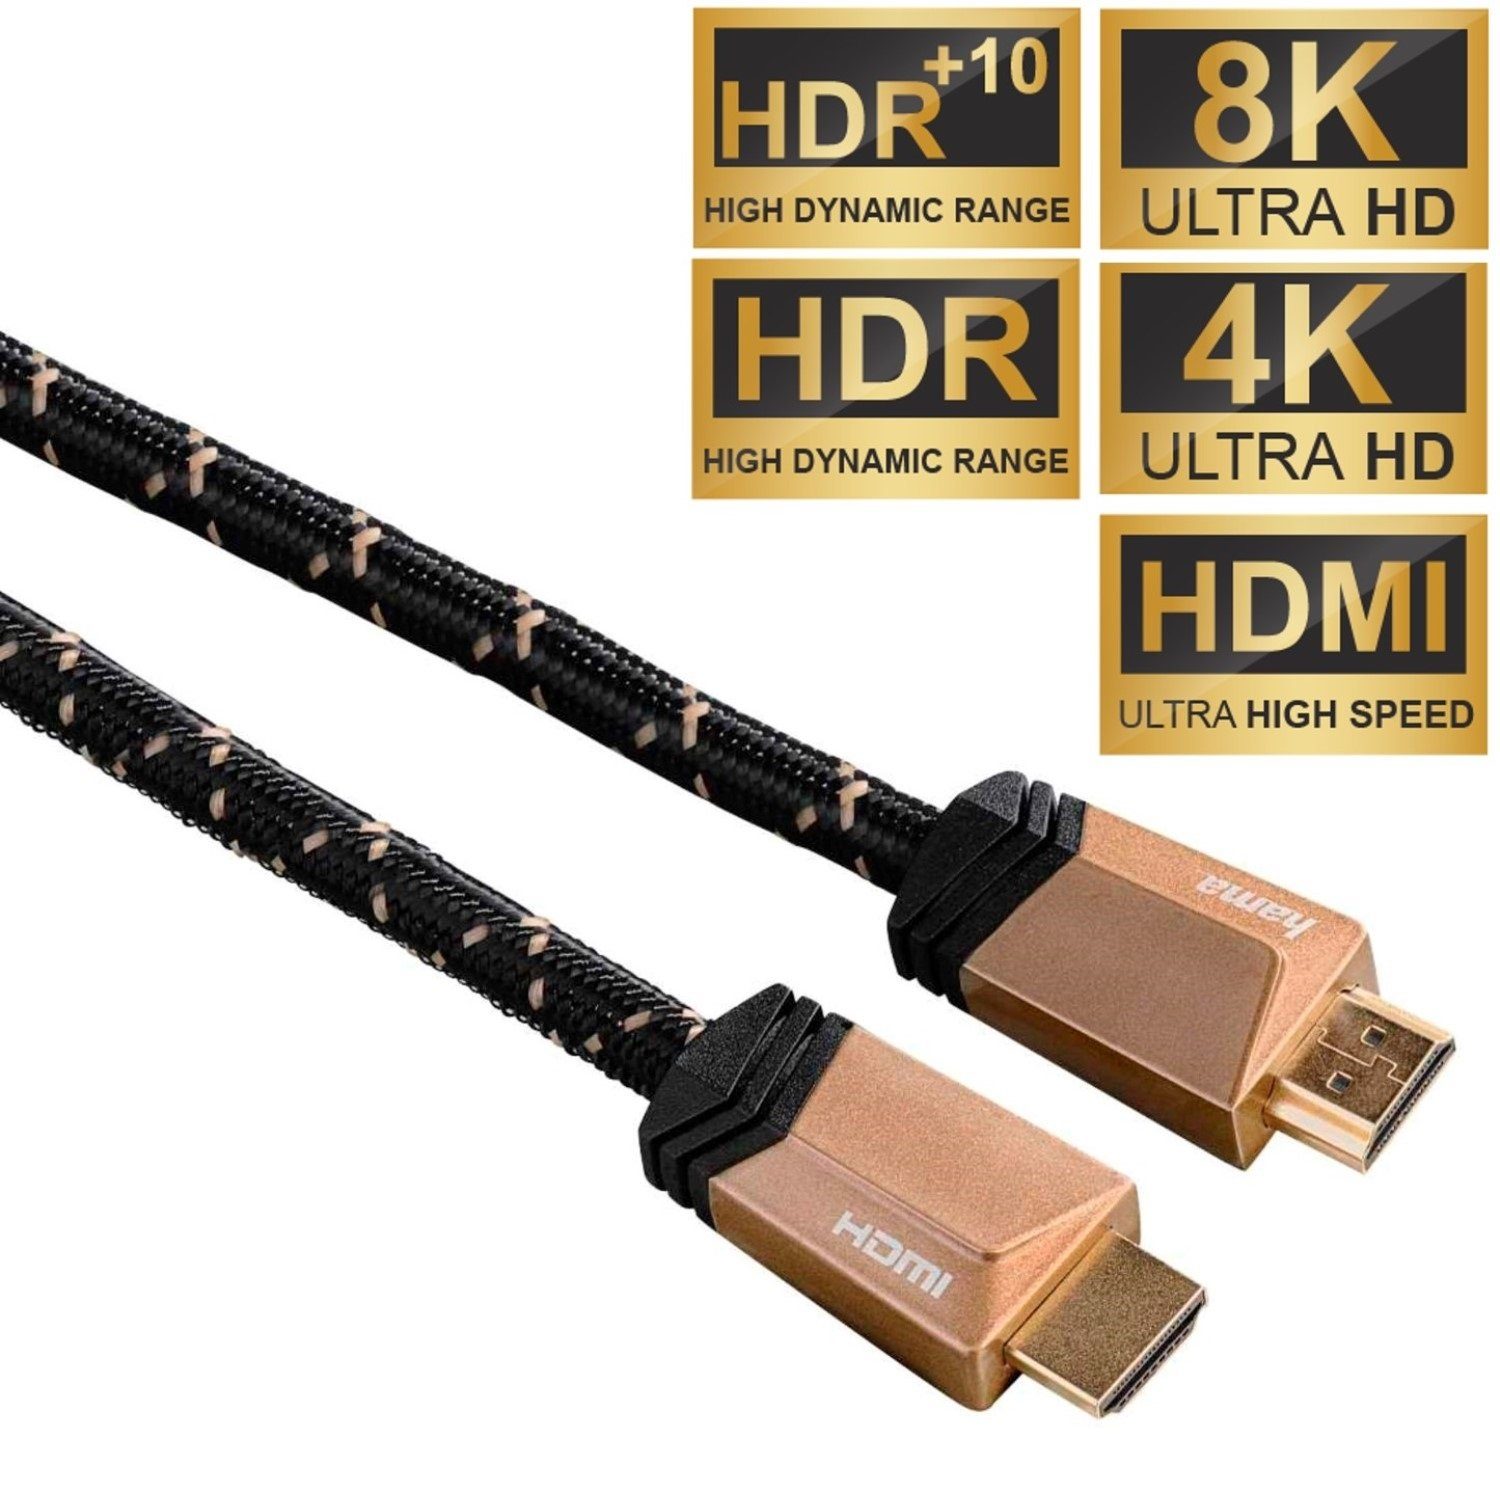 Hama Ultra High-Speed Hdmi-кабель 8K 2m vergoldet Video-Kabel, HDMI, (200 cm), HDMI 2.1 mit 8K 4K Full HD 48Gbit/s DSC eARC ARC 3D HD TV, vergoldet